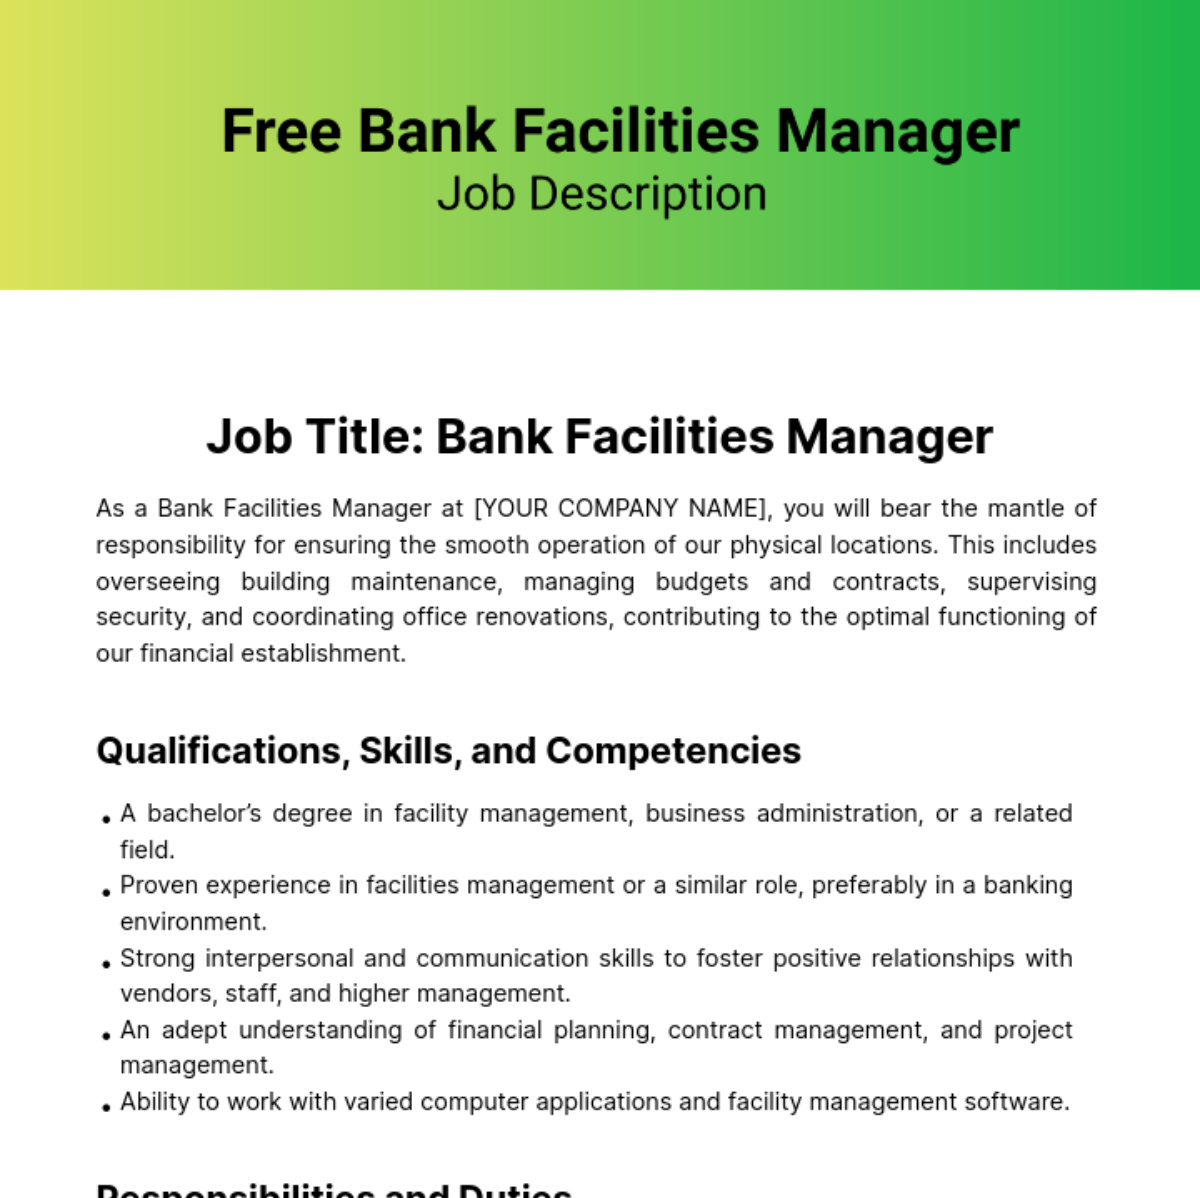 Bank Facilities Manager Job Description Template